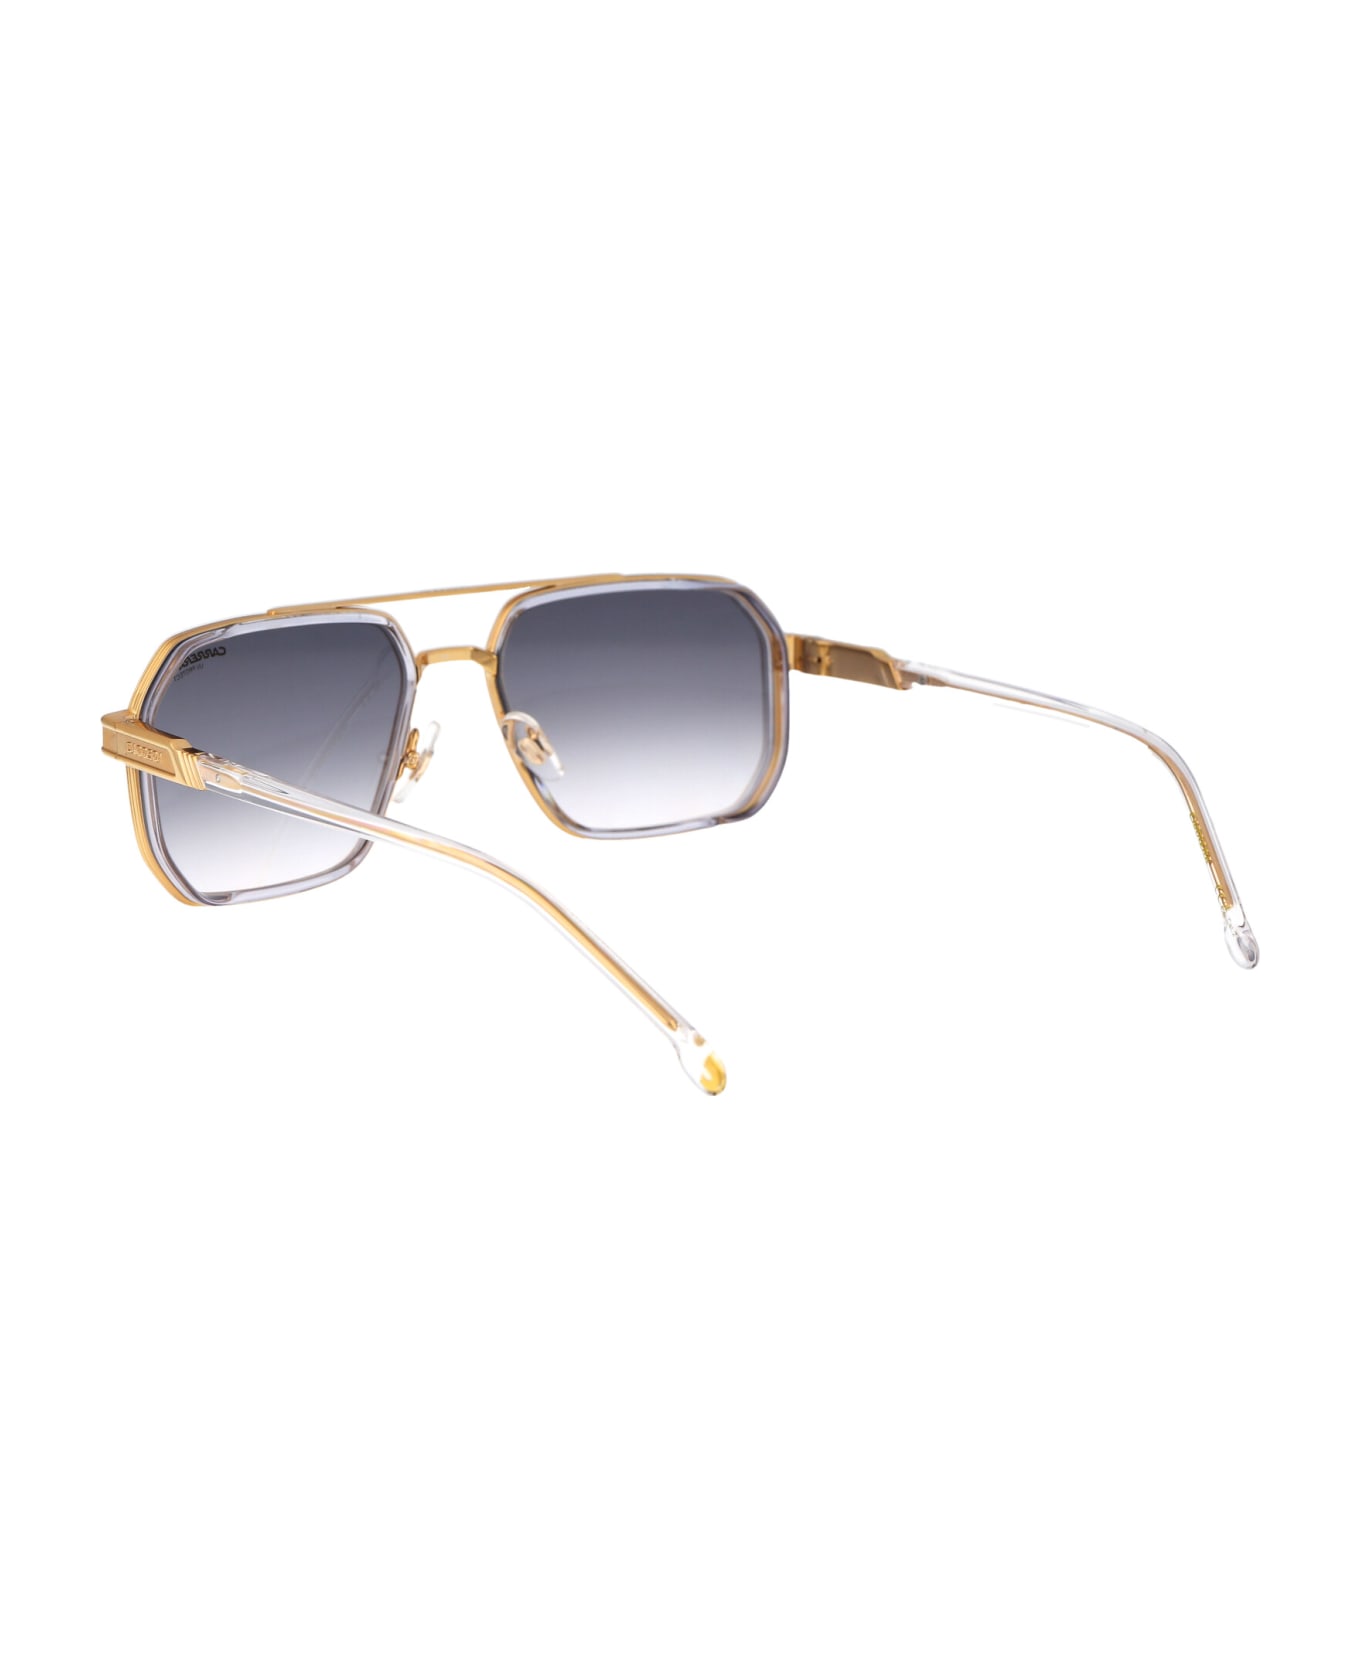 Carrera 1069/s Sunglasses - REJFQ CRYS GOLD